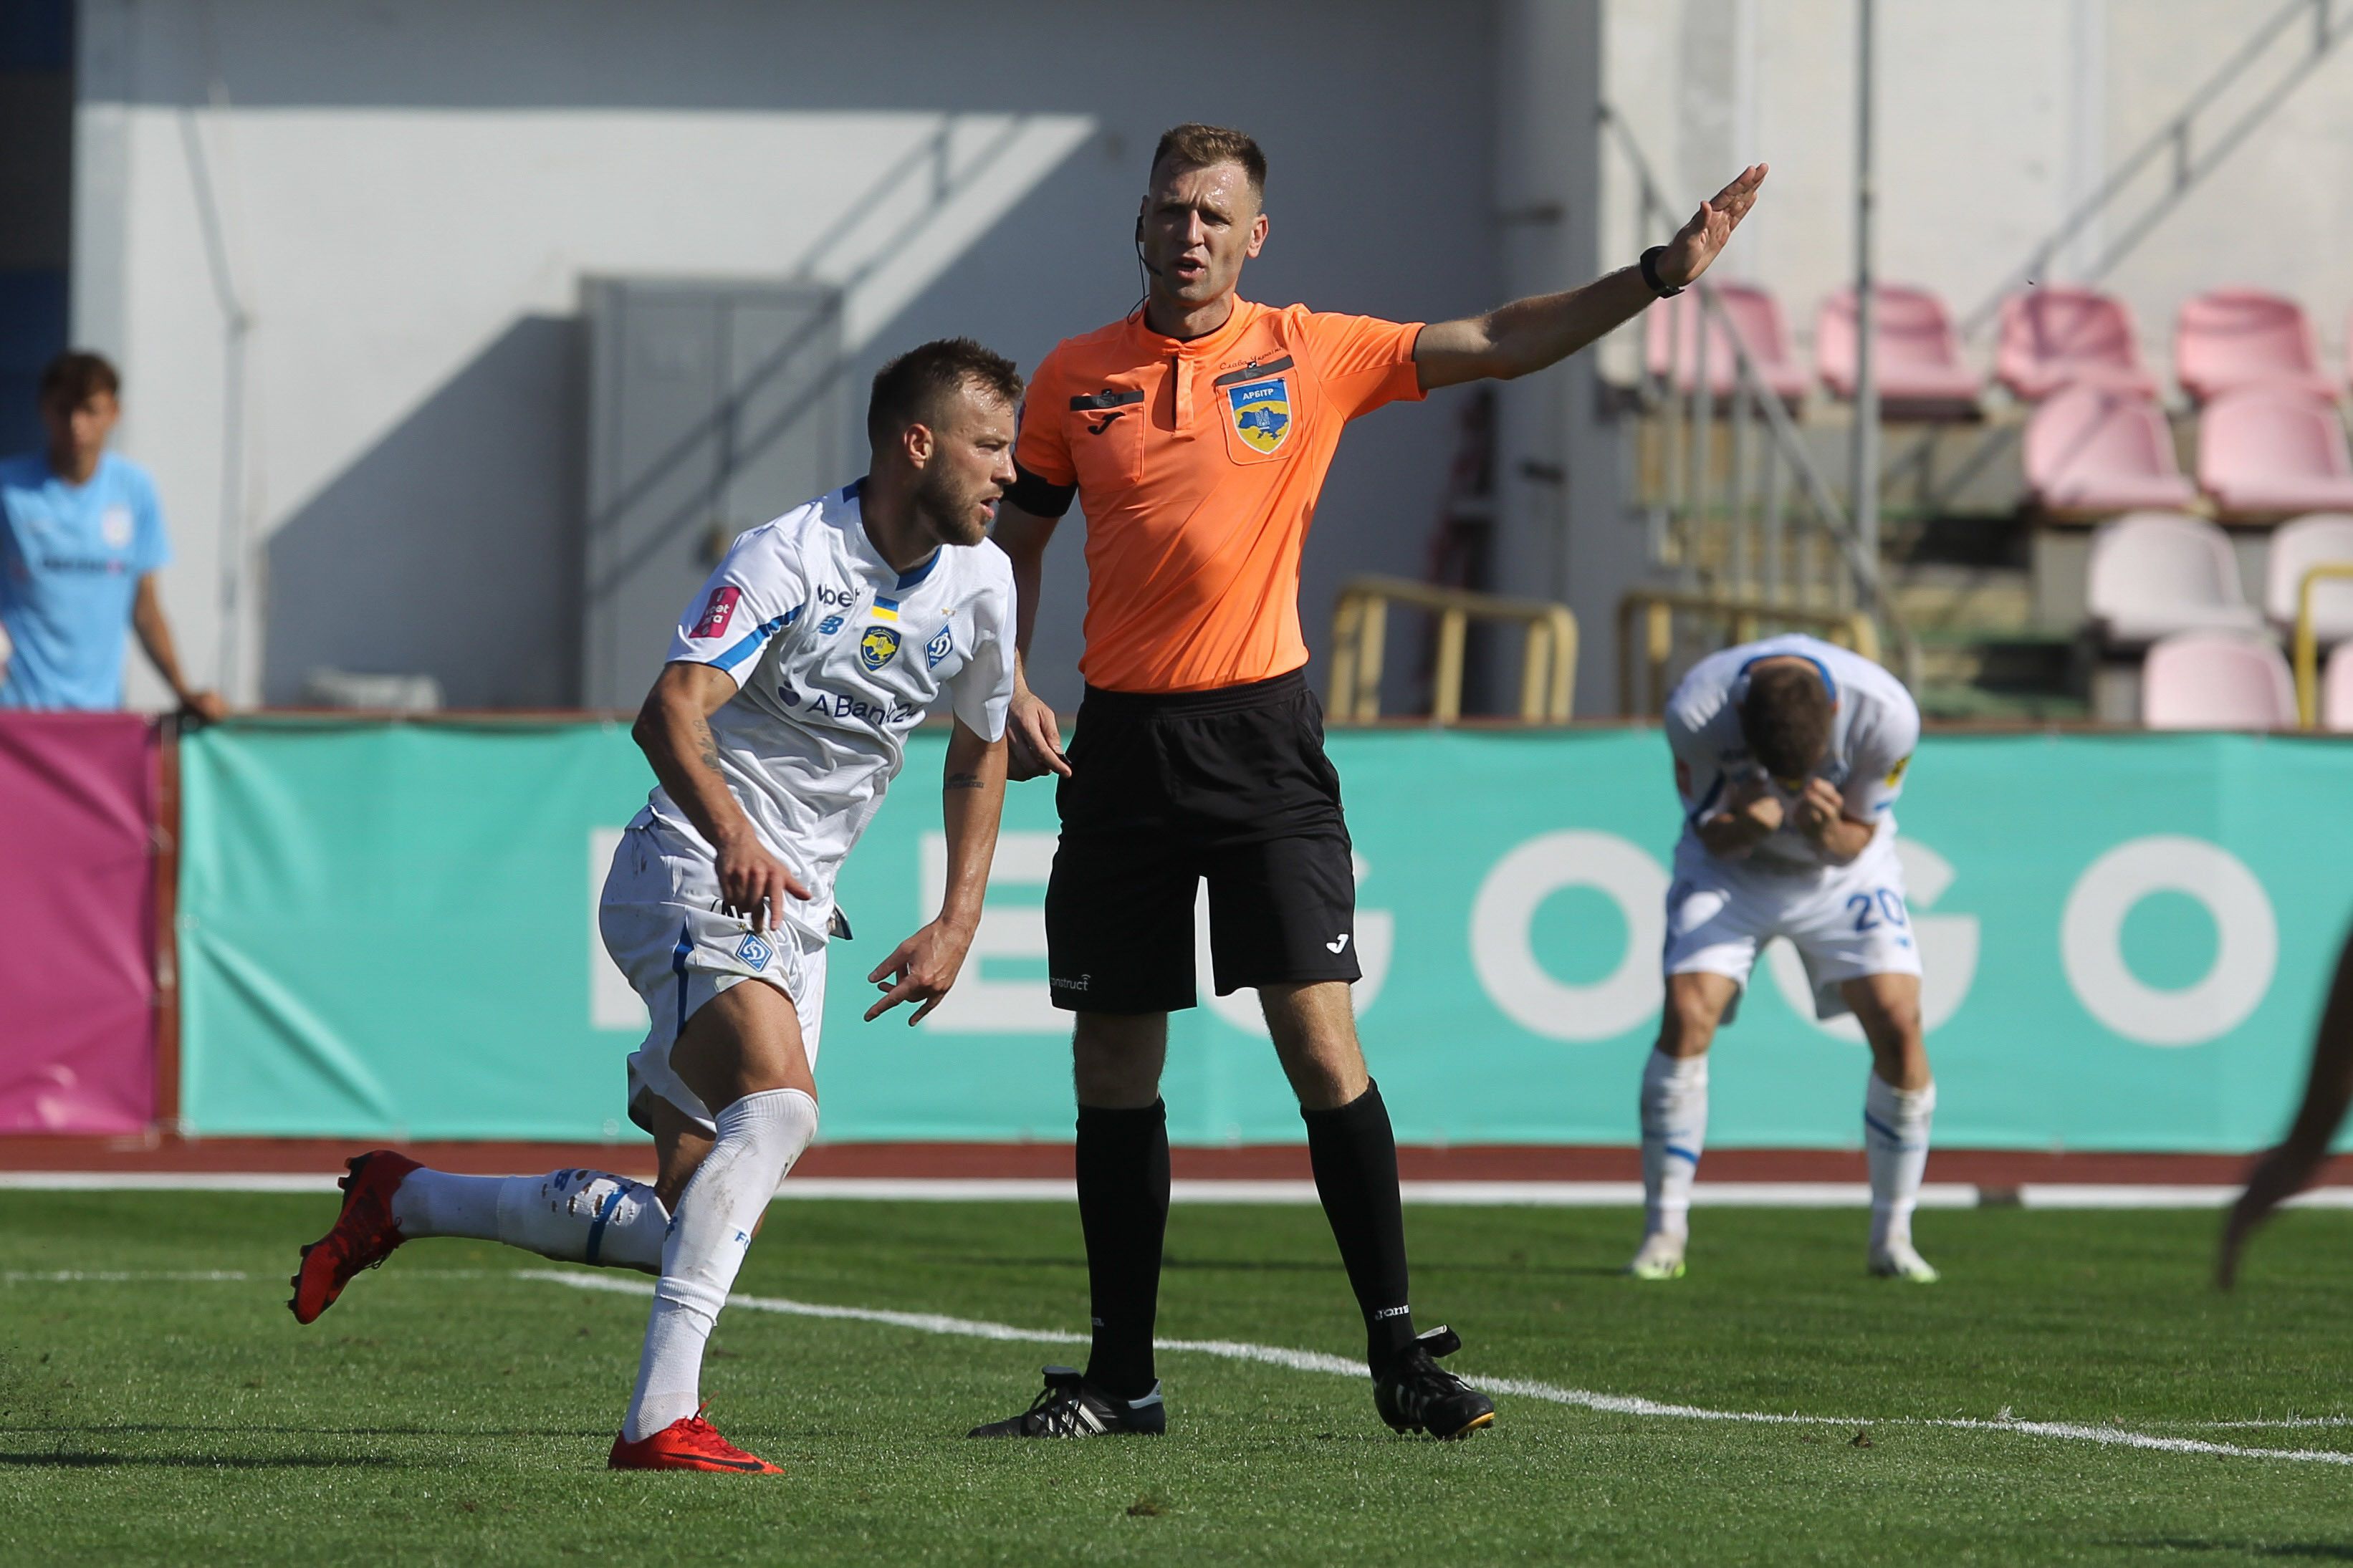 Dmytro Panchyshyn – Rukh vs Dynamo referee